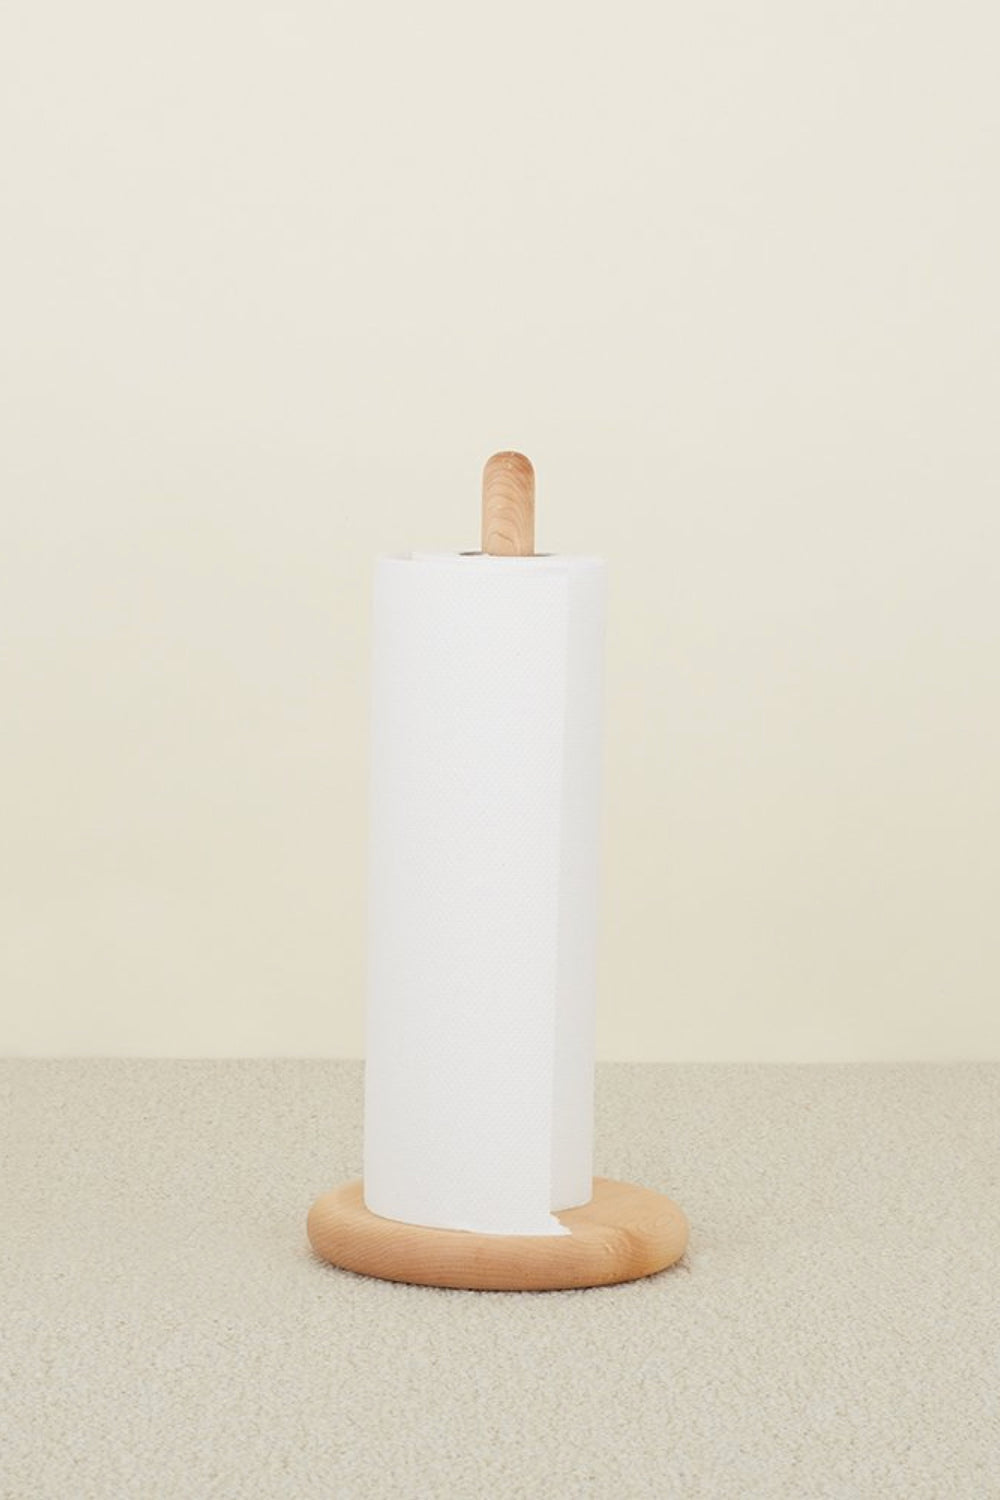 Maple Simple Paper Towel Holder